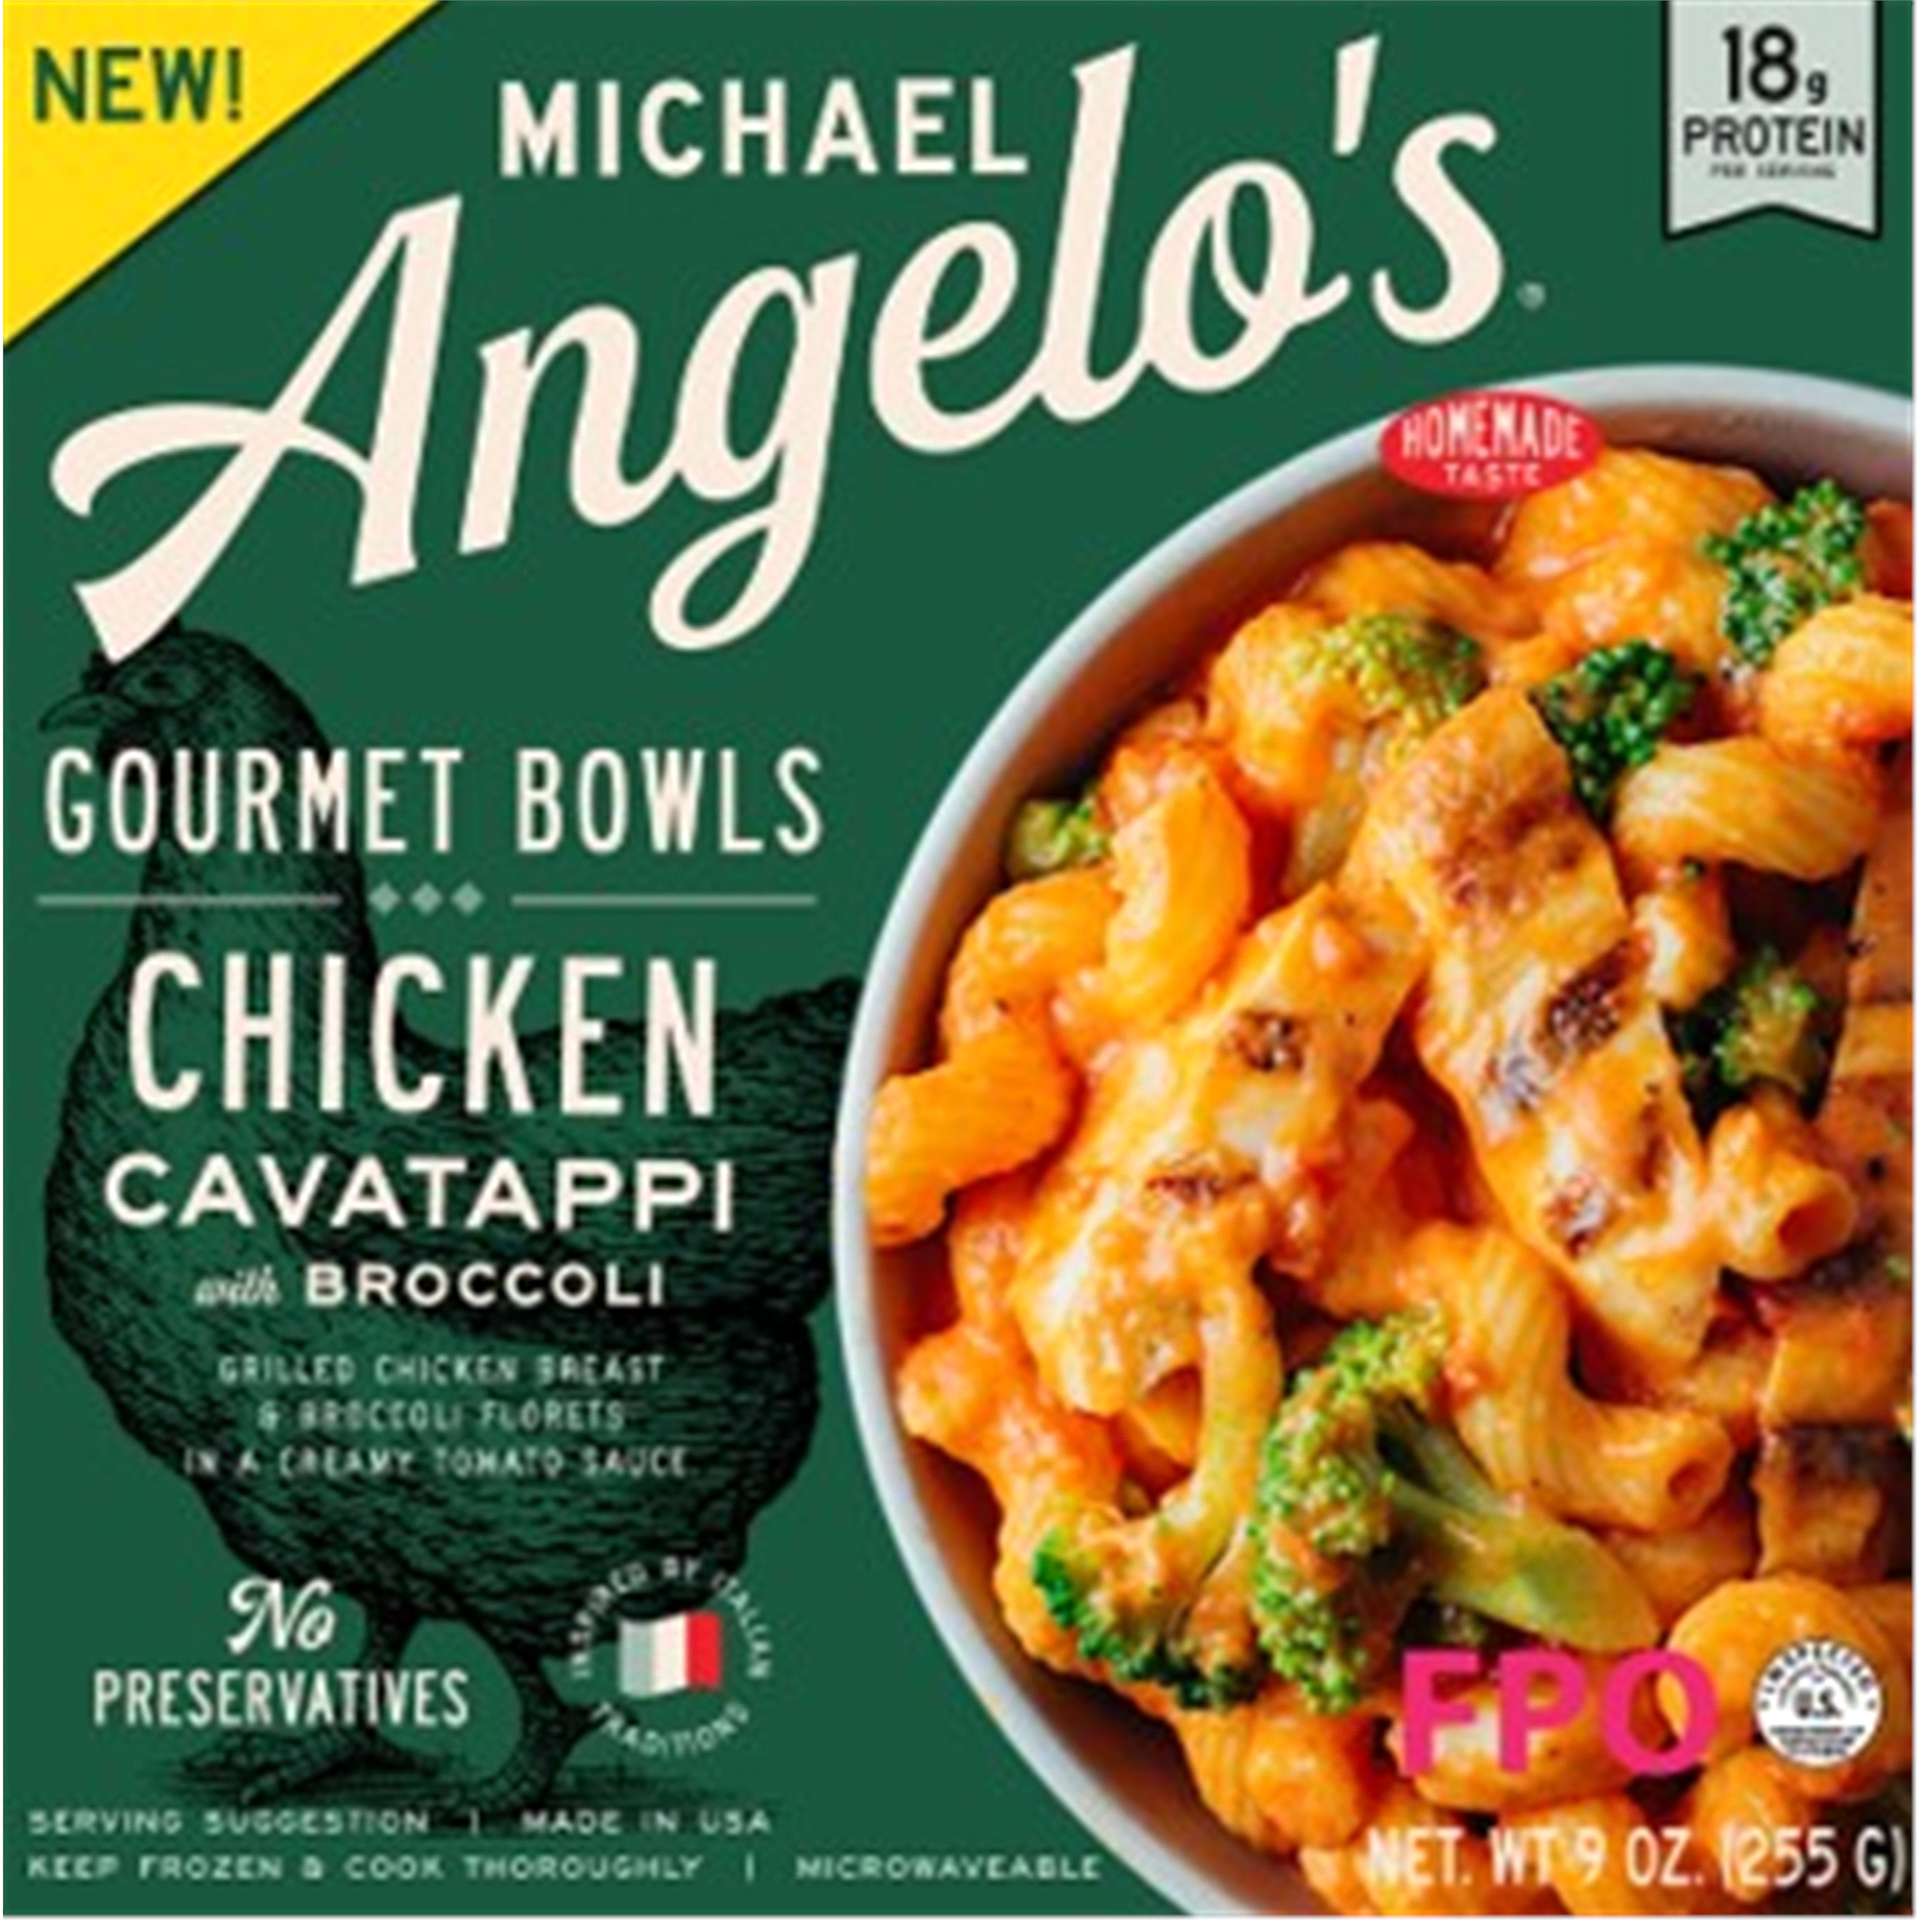 slide 1 of 8, Michael Angelo's Gourmet Bowls Chicken Cavatappi with Broccoli&nbsp;, 9 oz